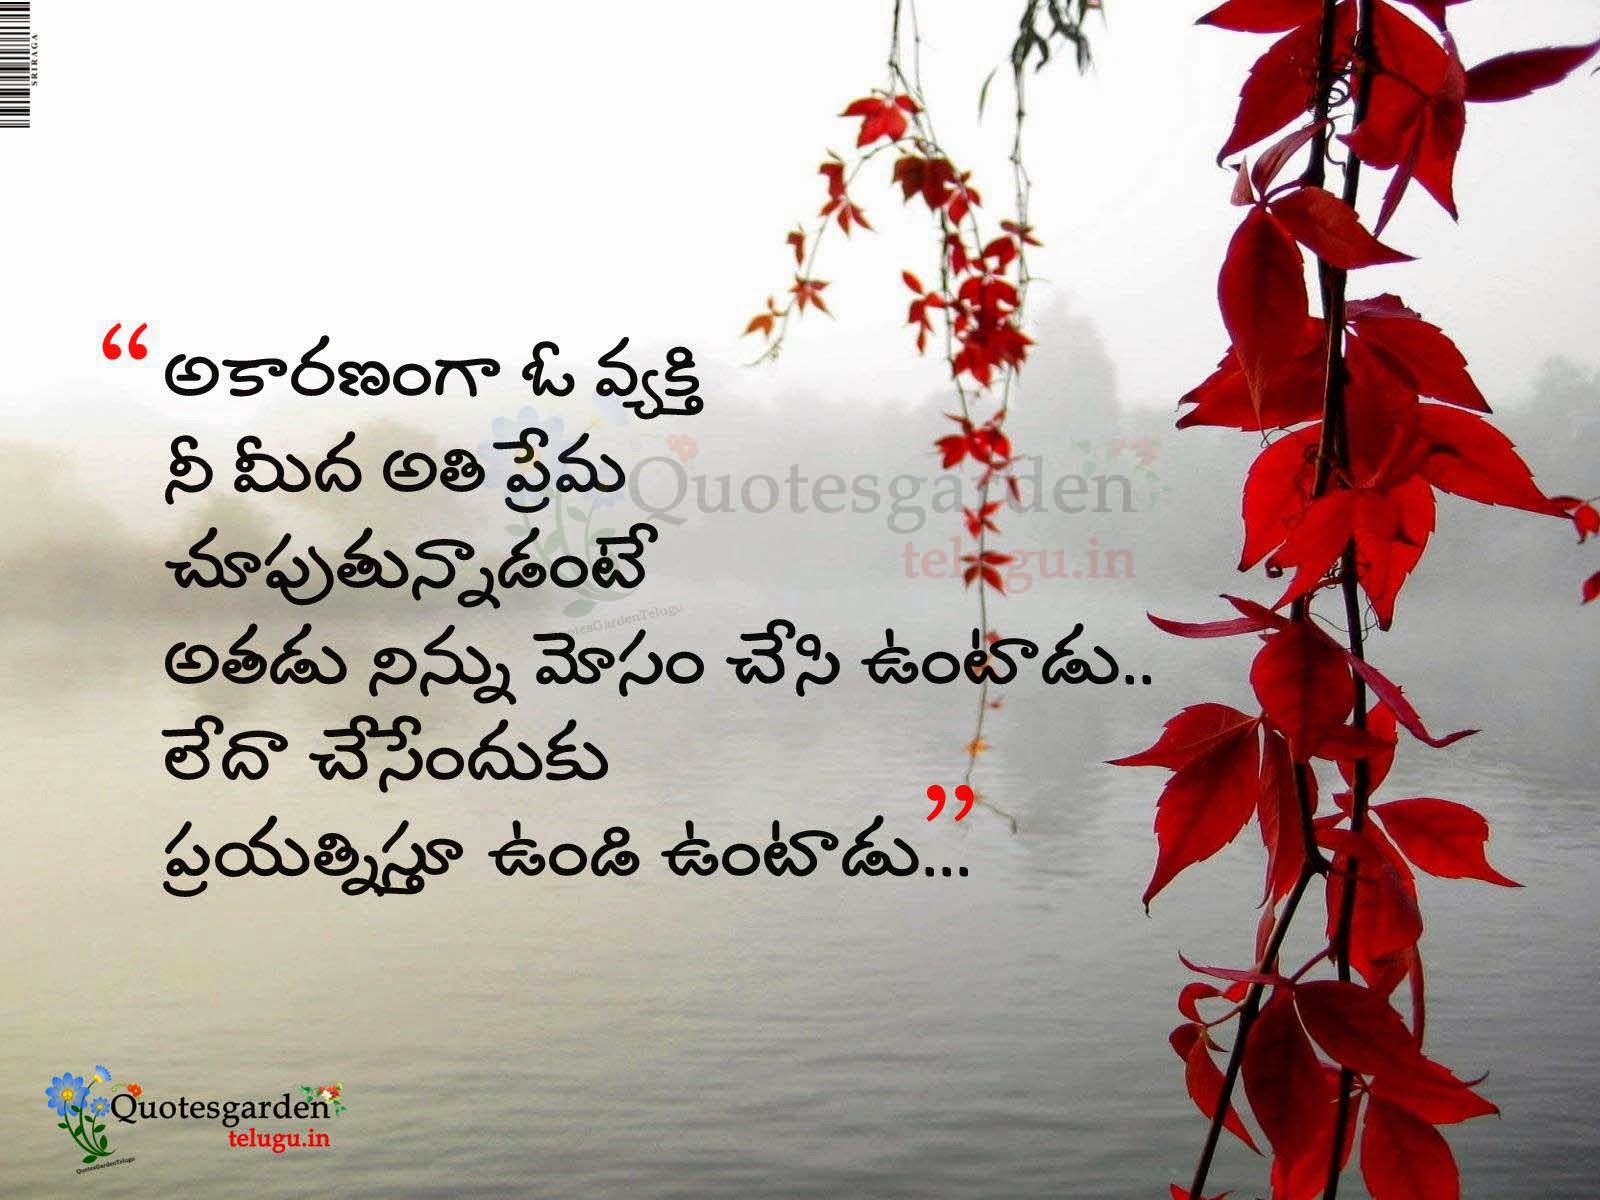 Best Inspirational Telugu Quotes Nice Telugu Life Quotes with images